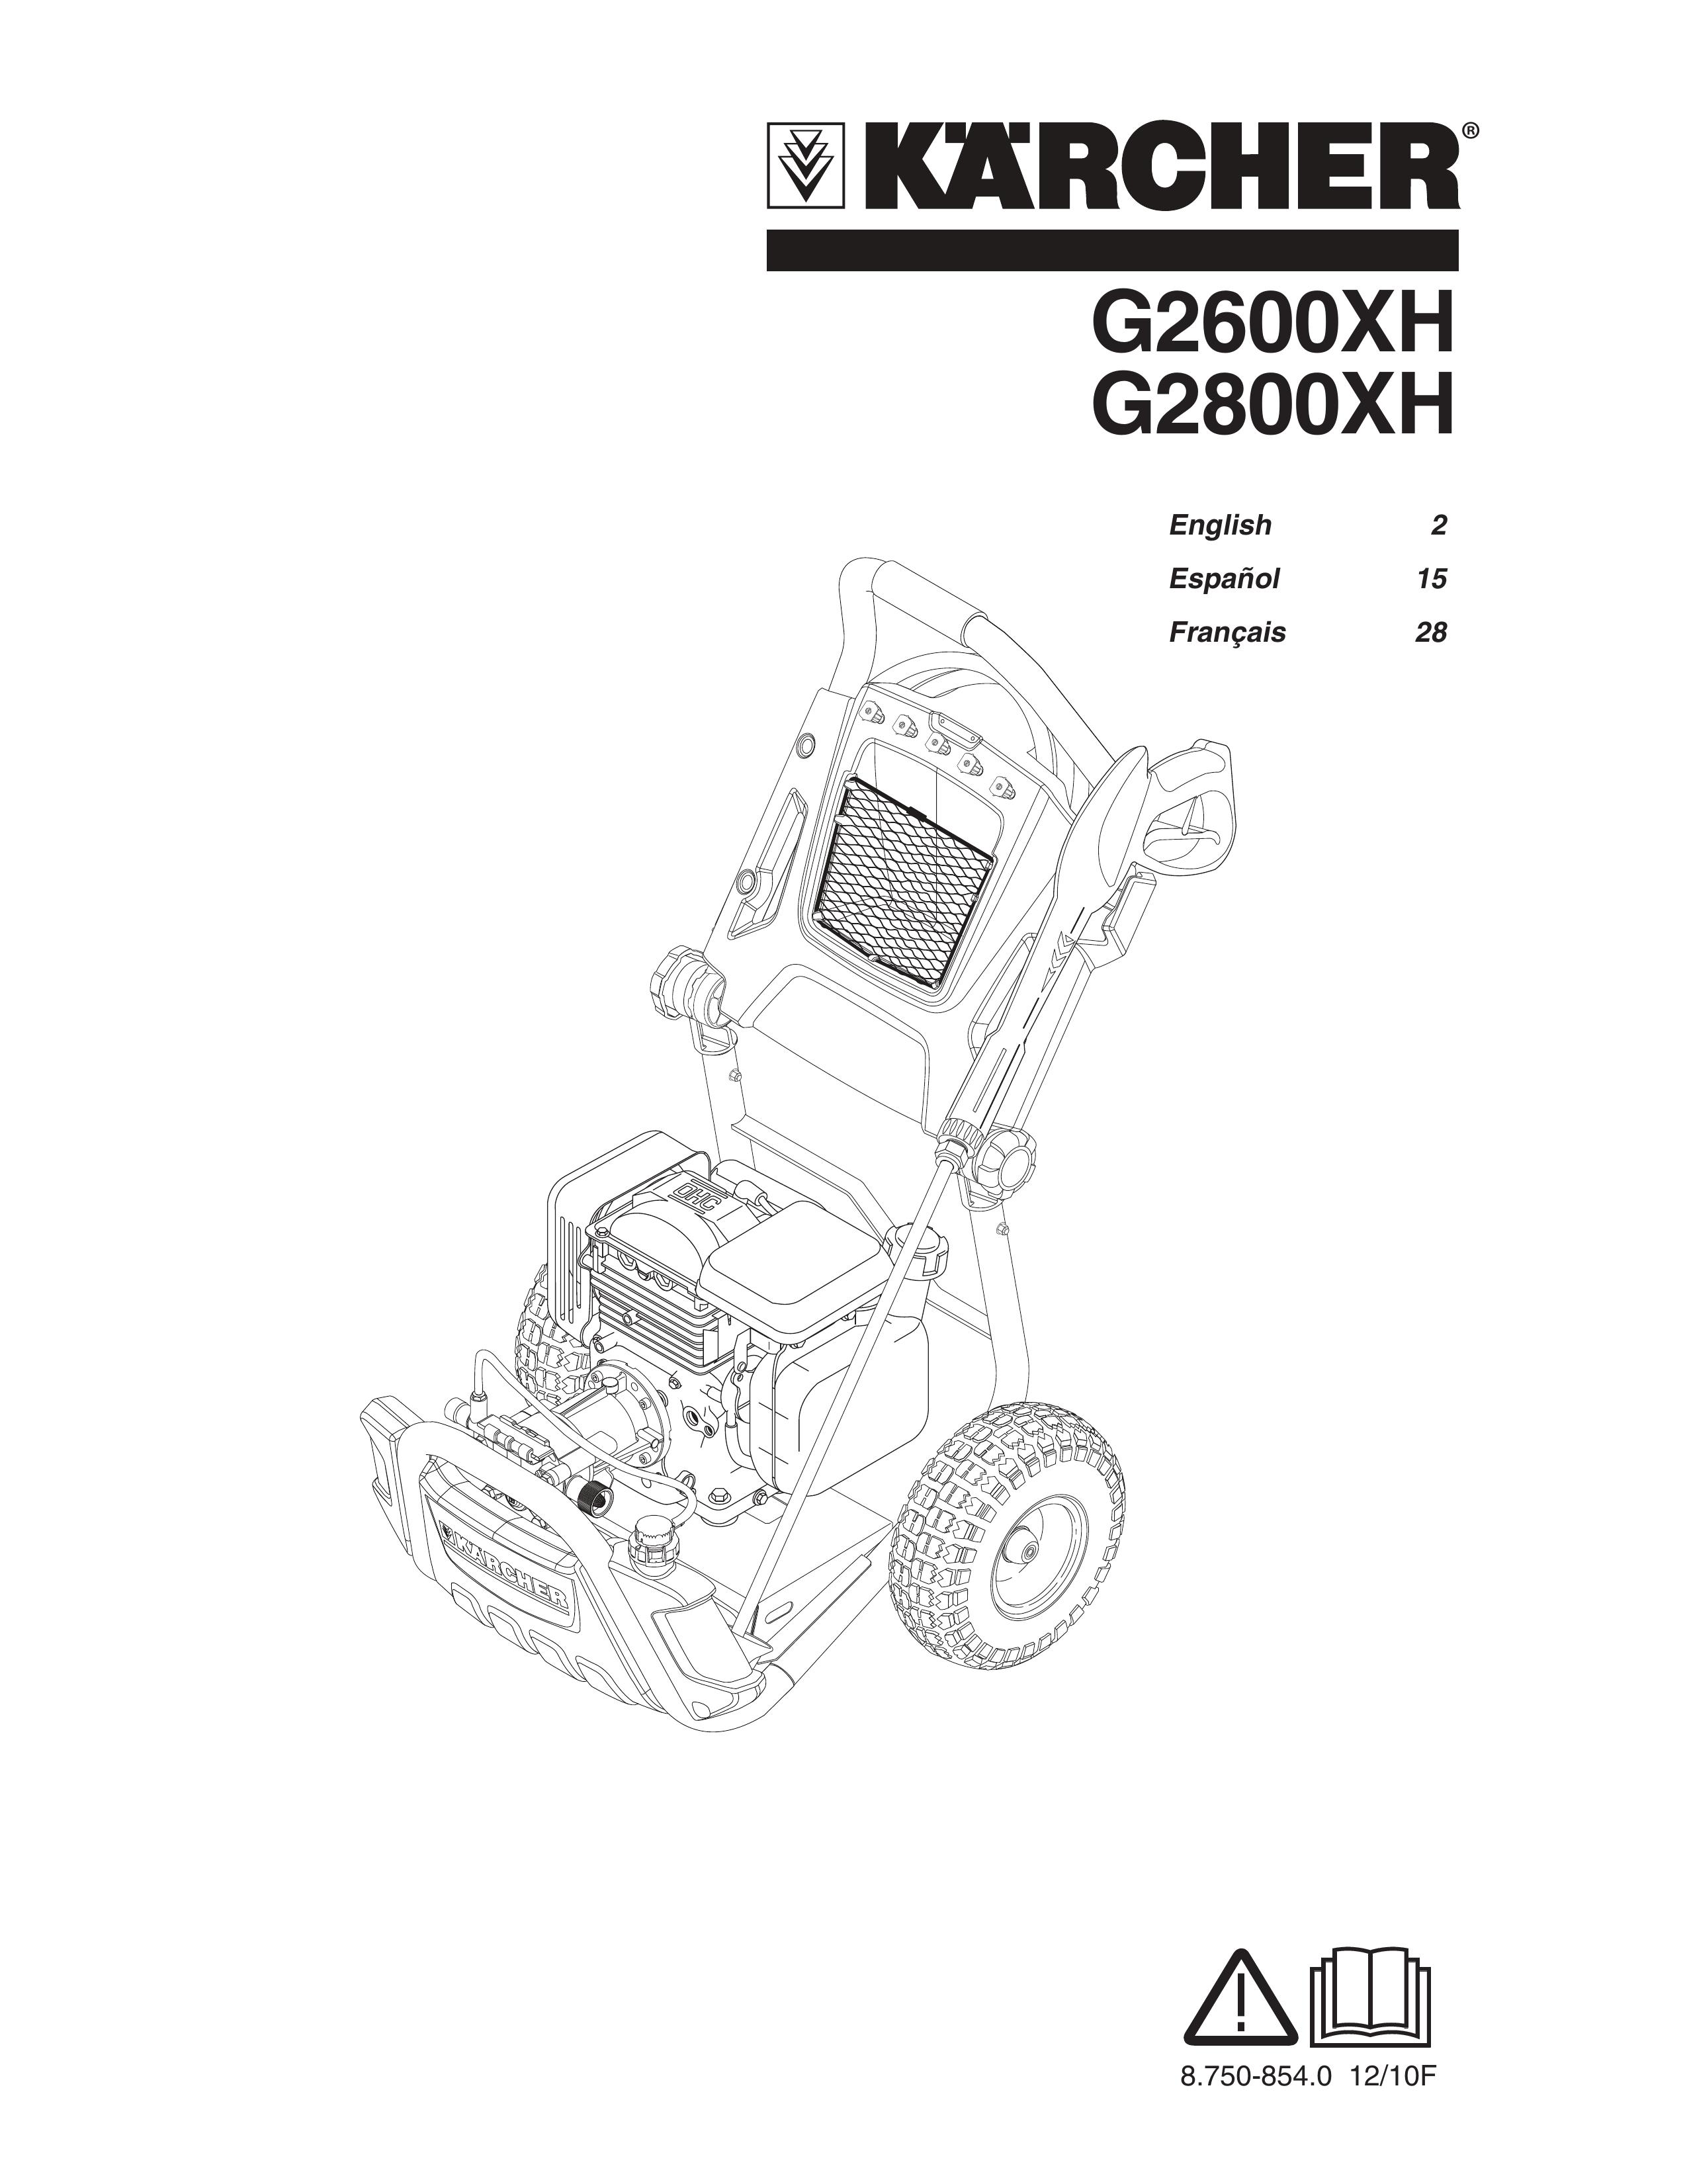 Karcher G2600XH Pressure Washer User Manual